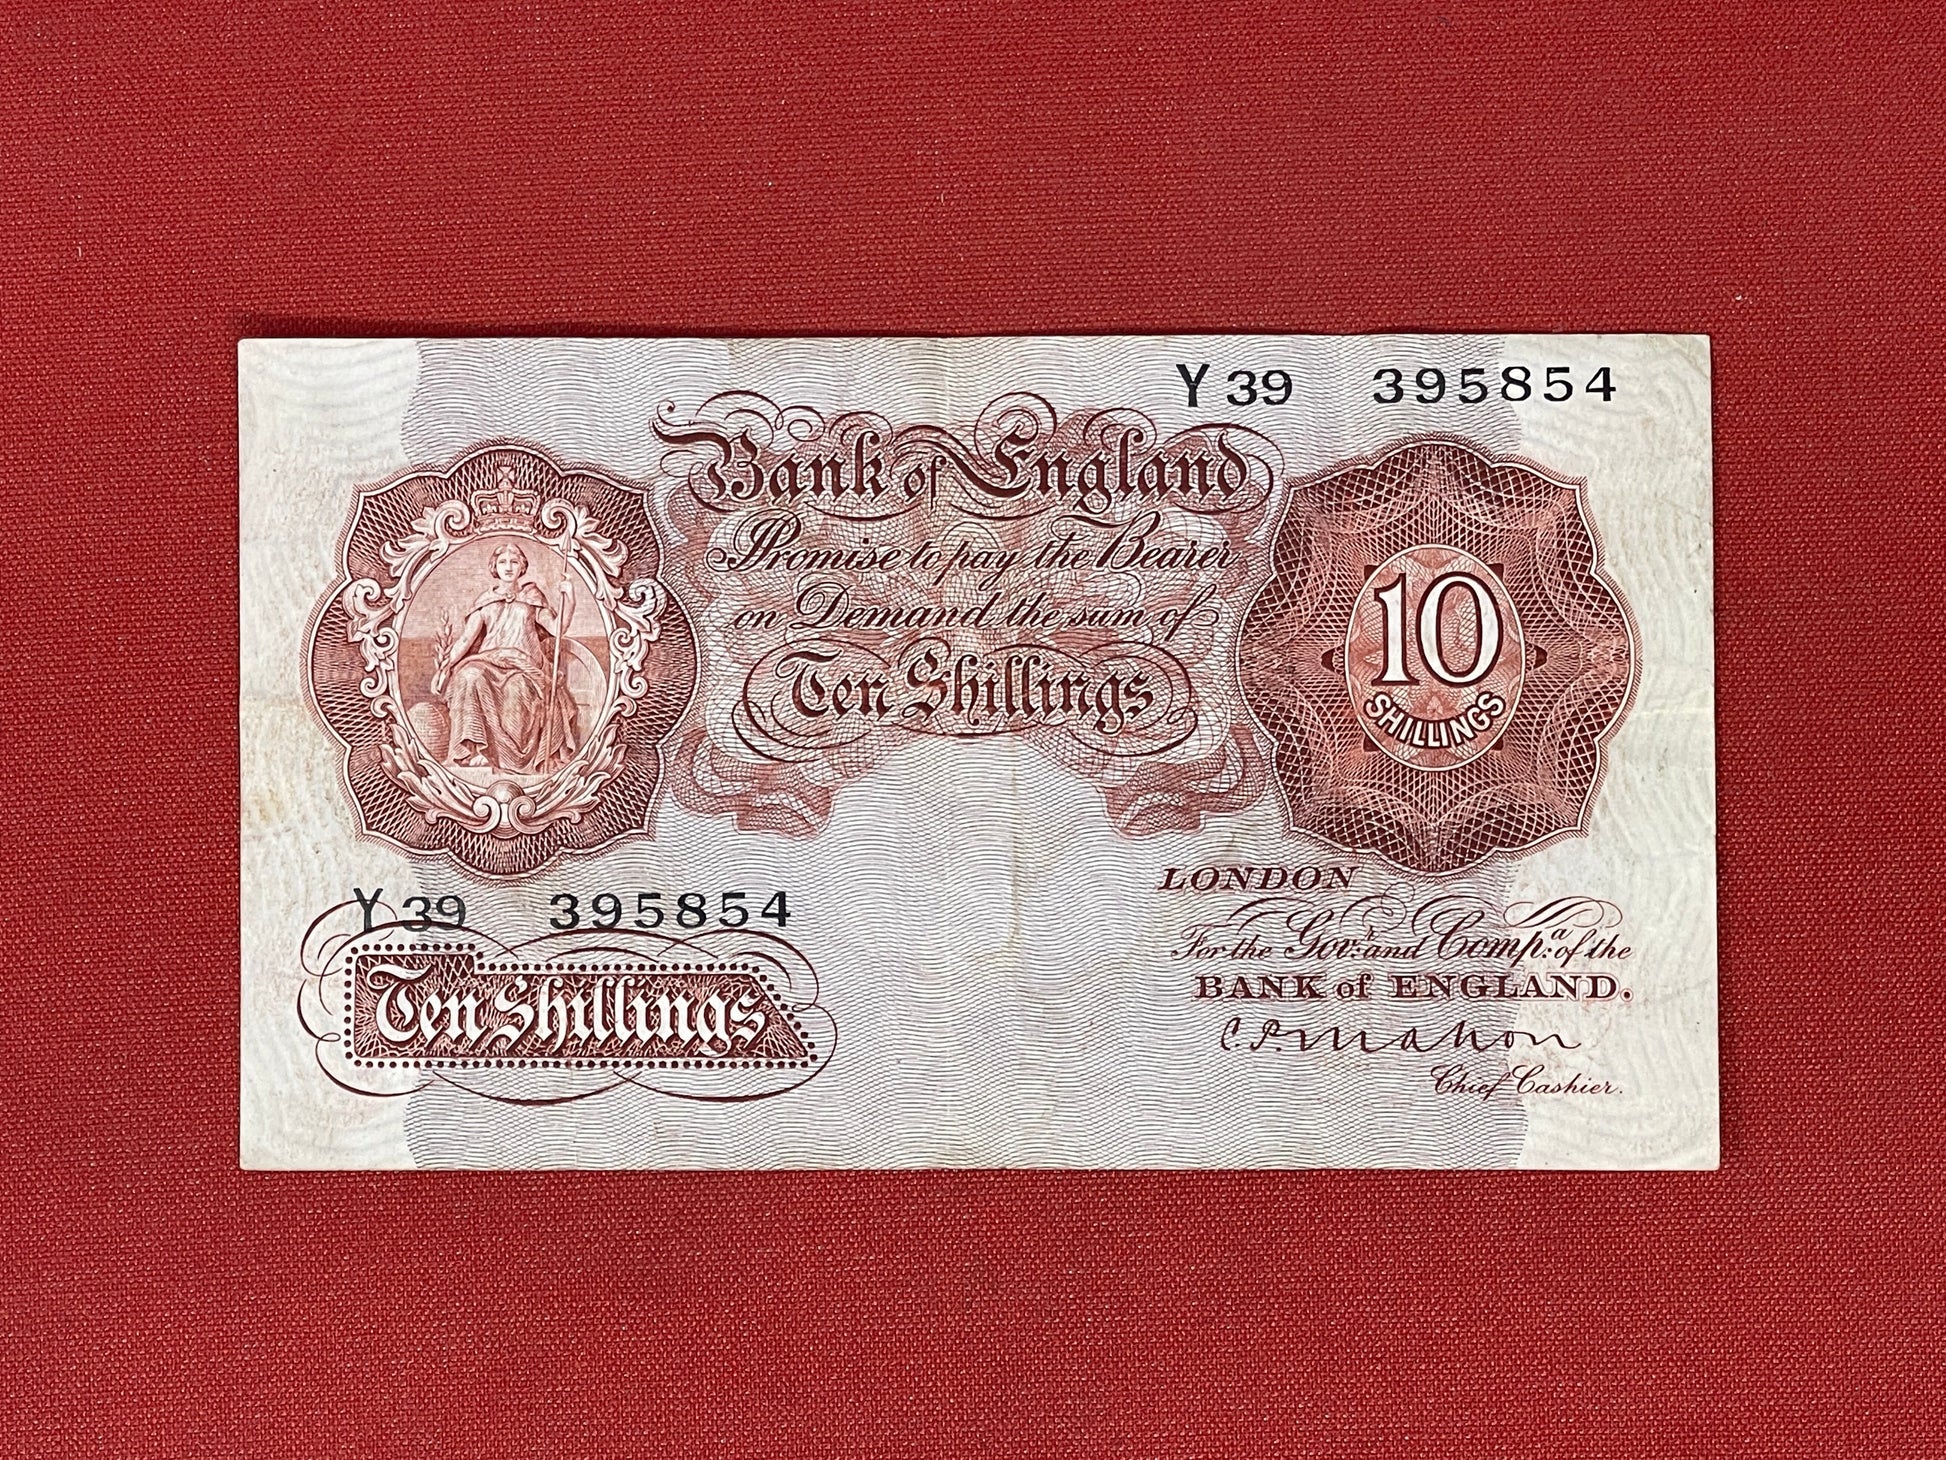 B.G. Catterns, 10 Shilling, L34 498971 ( Dugg. B.223 ) Series "A" Britannia Issue 15th July 1930